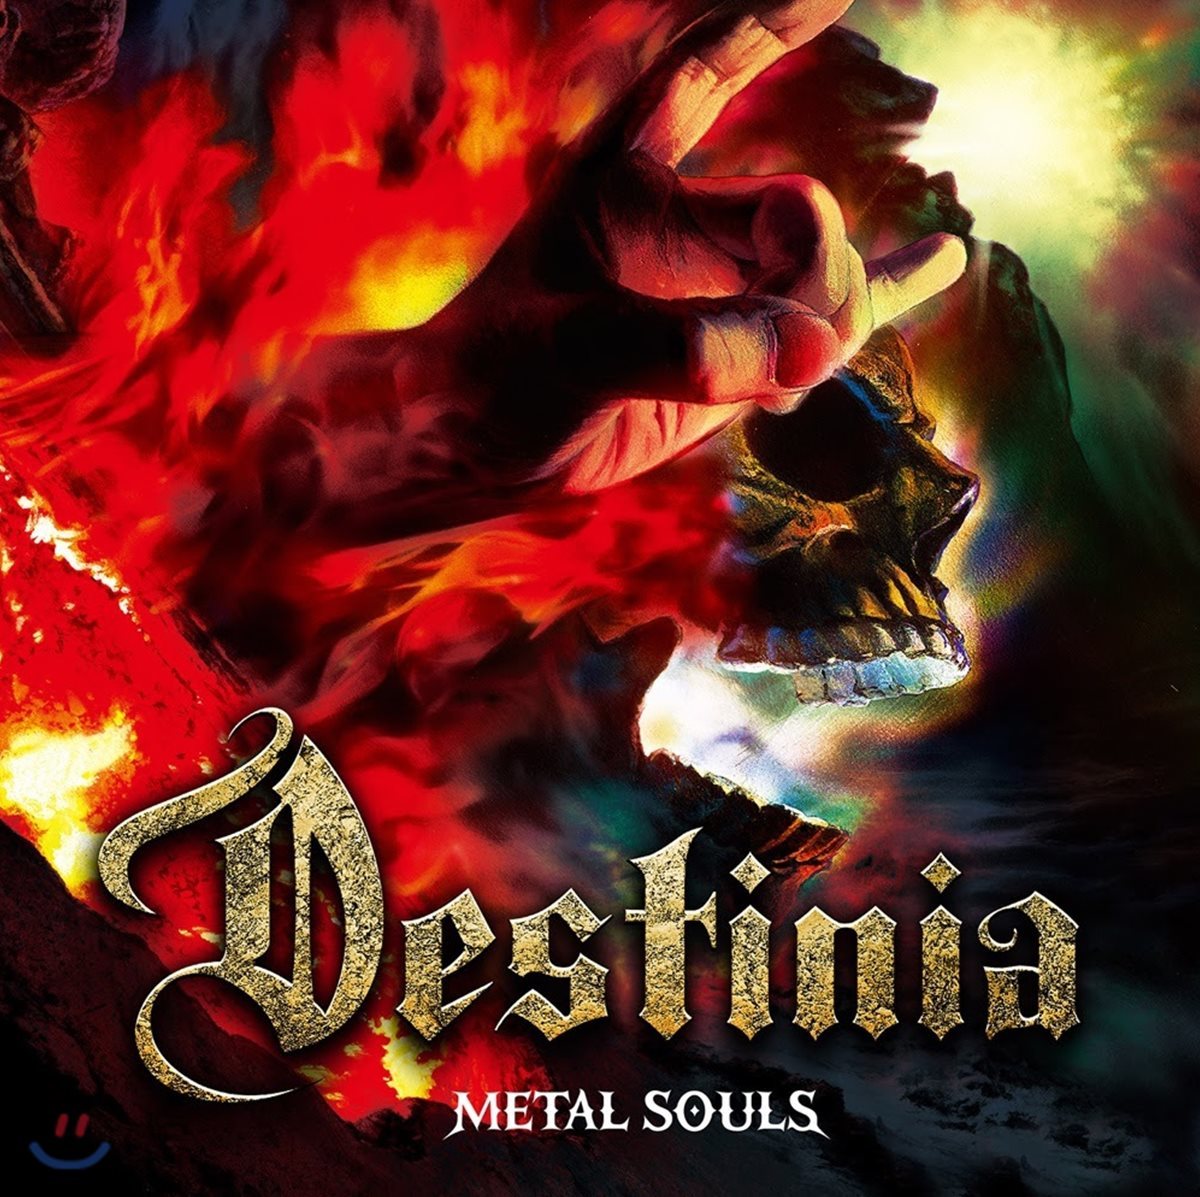 Destinia (데스티니아) - Metal Souls